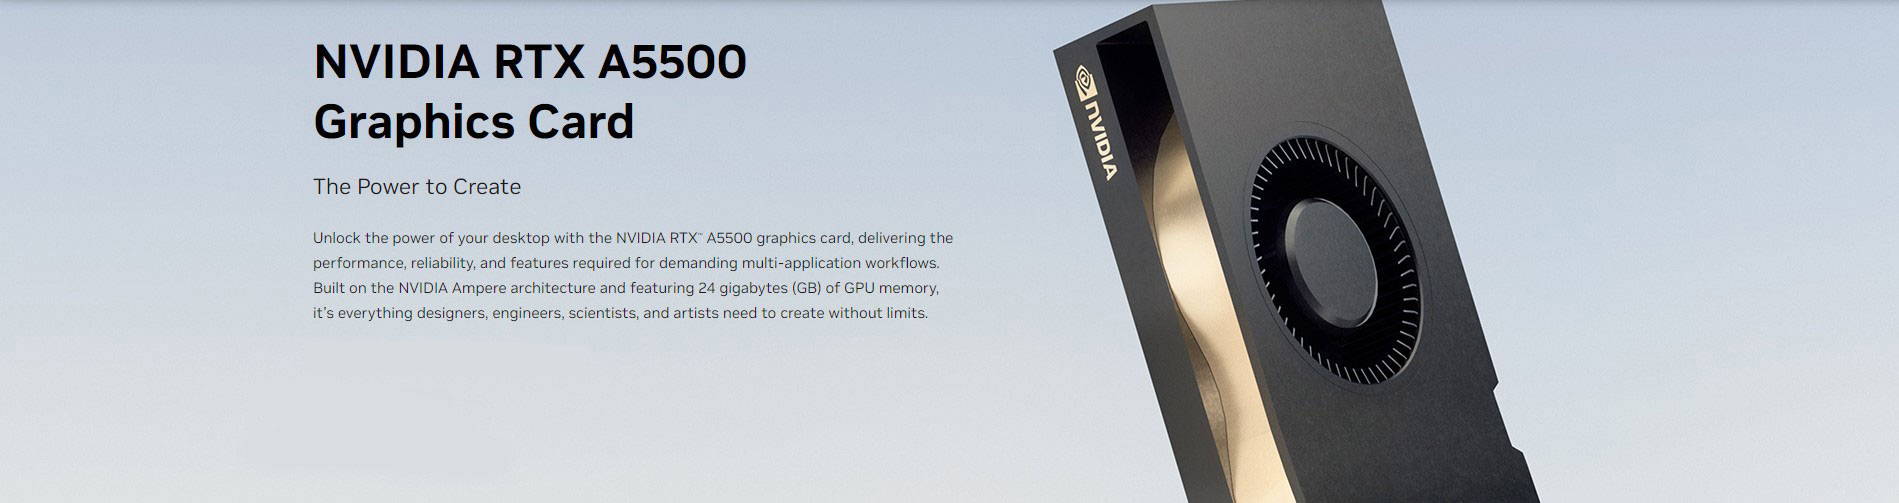 NVIDIA RTX A5500 Graphics Card